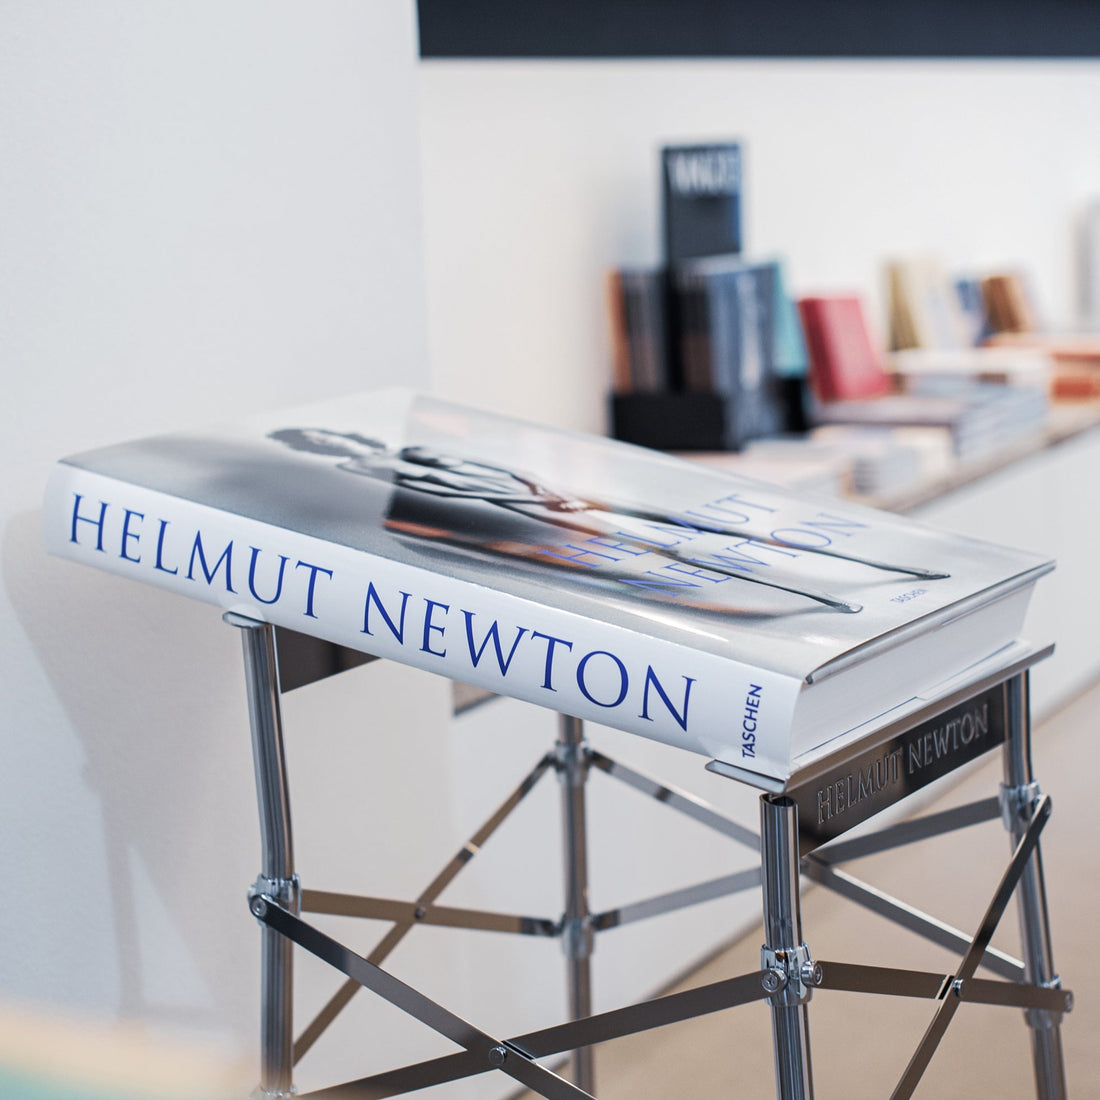 Helmut Newton. BABY SUMO